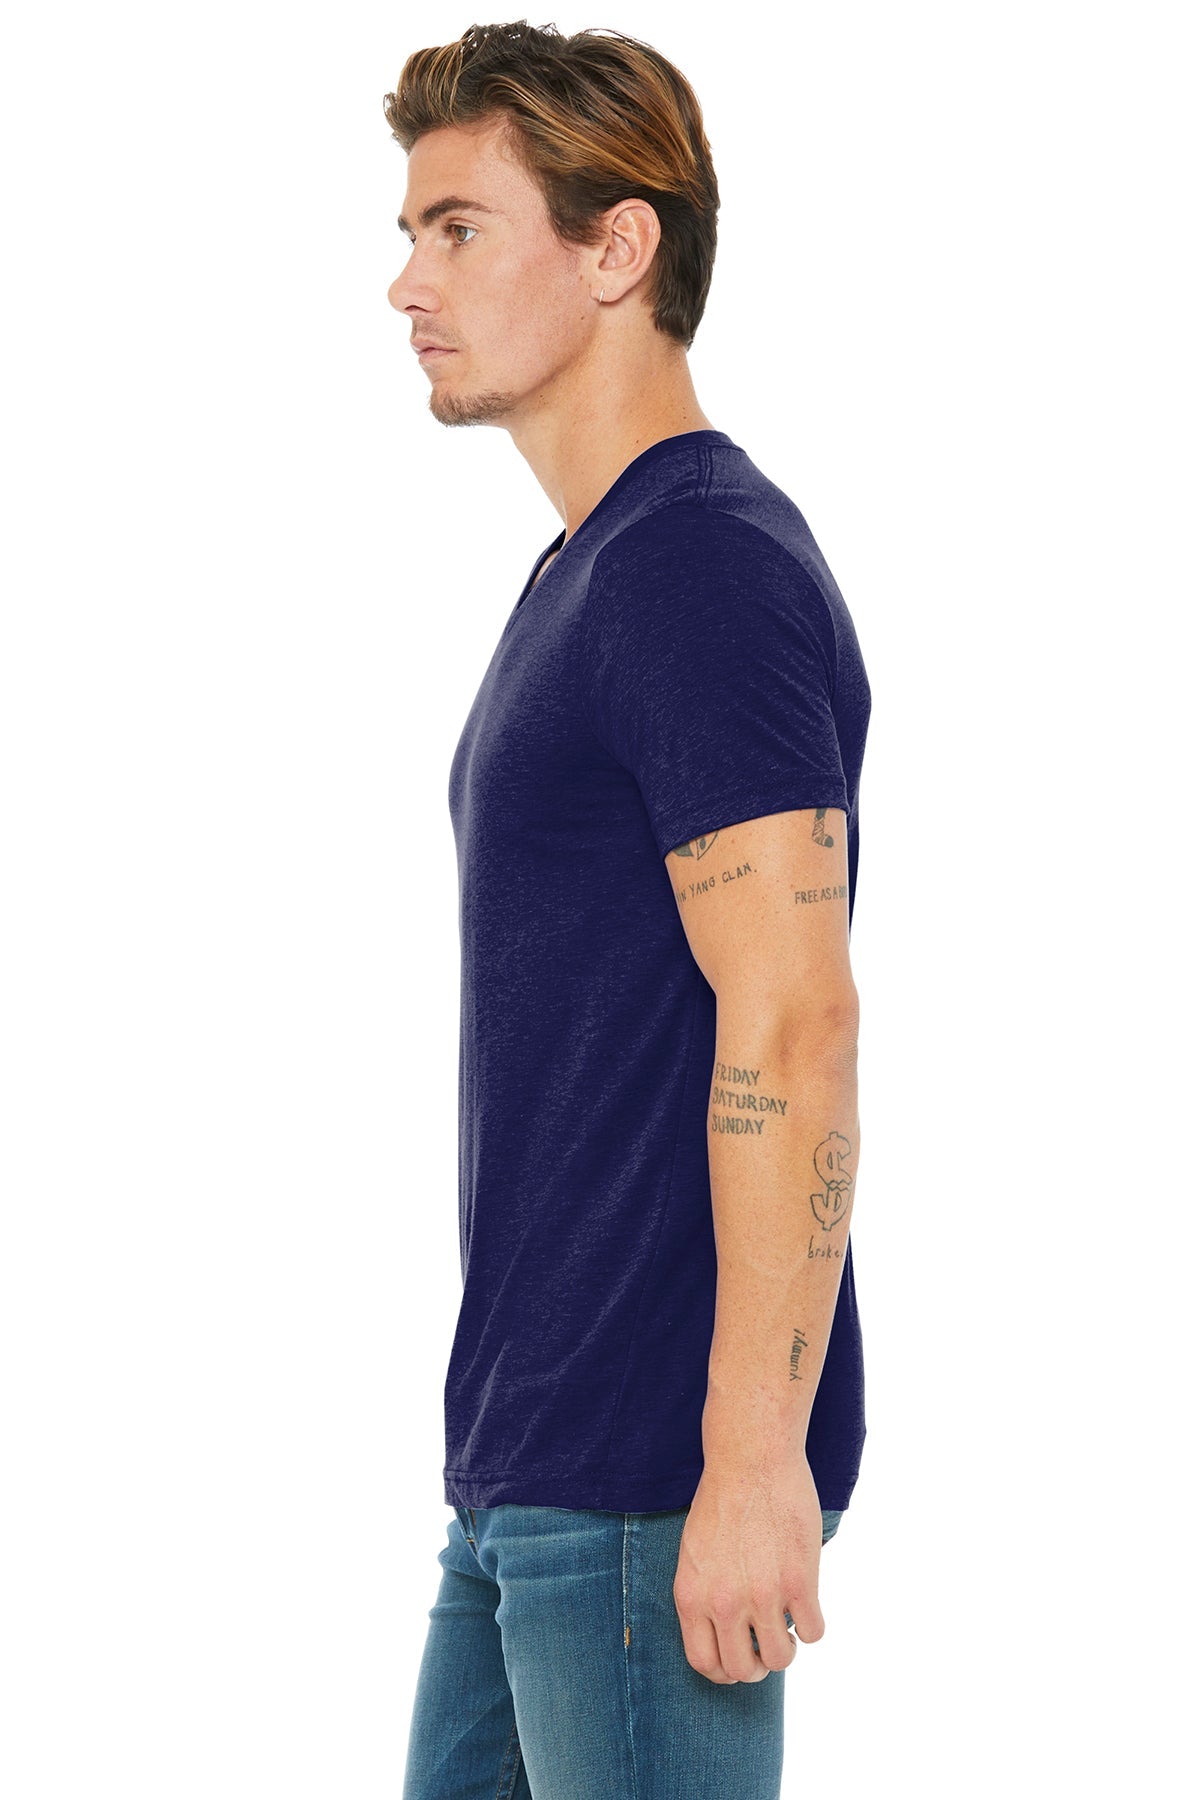 bella + canvas unisex triblend short sleeve v-neck t-shirt 3415c navy triblend